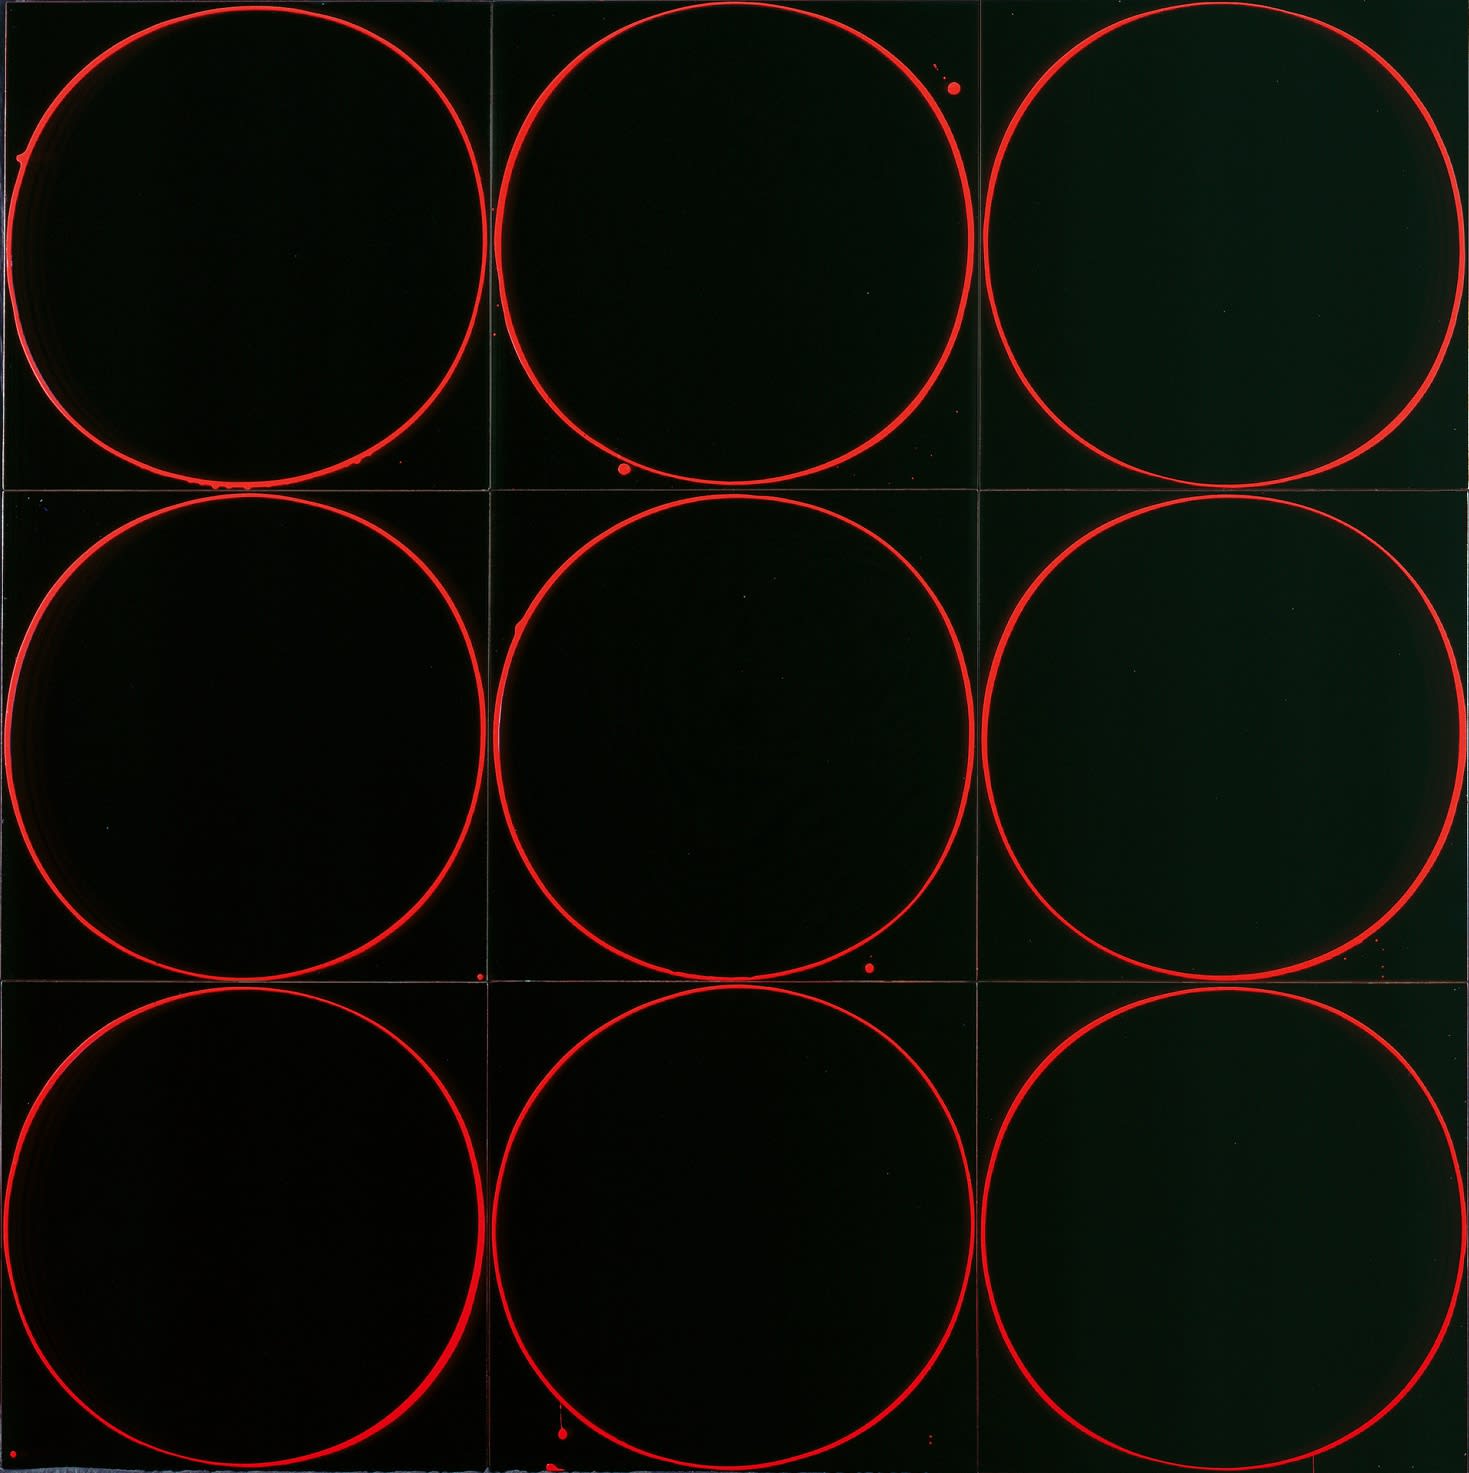 Untitled Circle Painting: Black/Red/Black, 2005